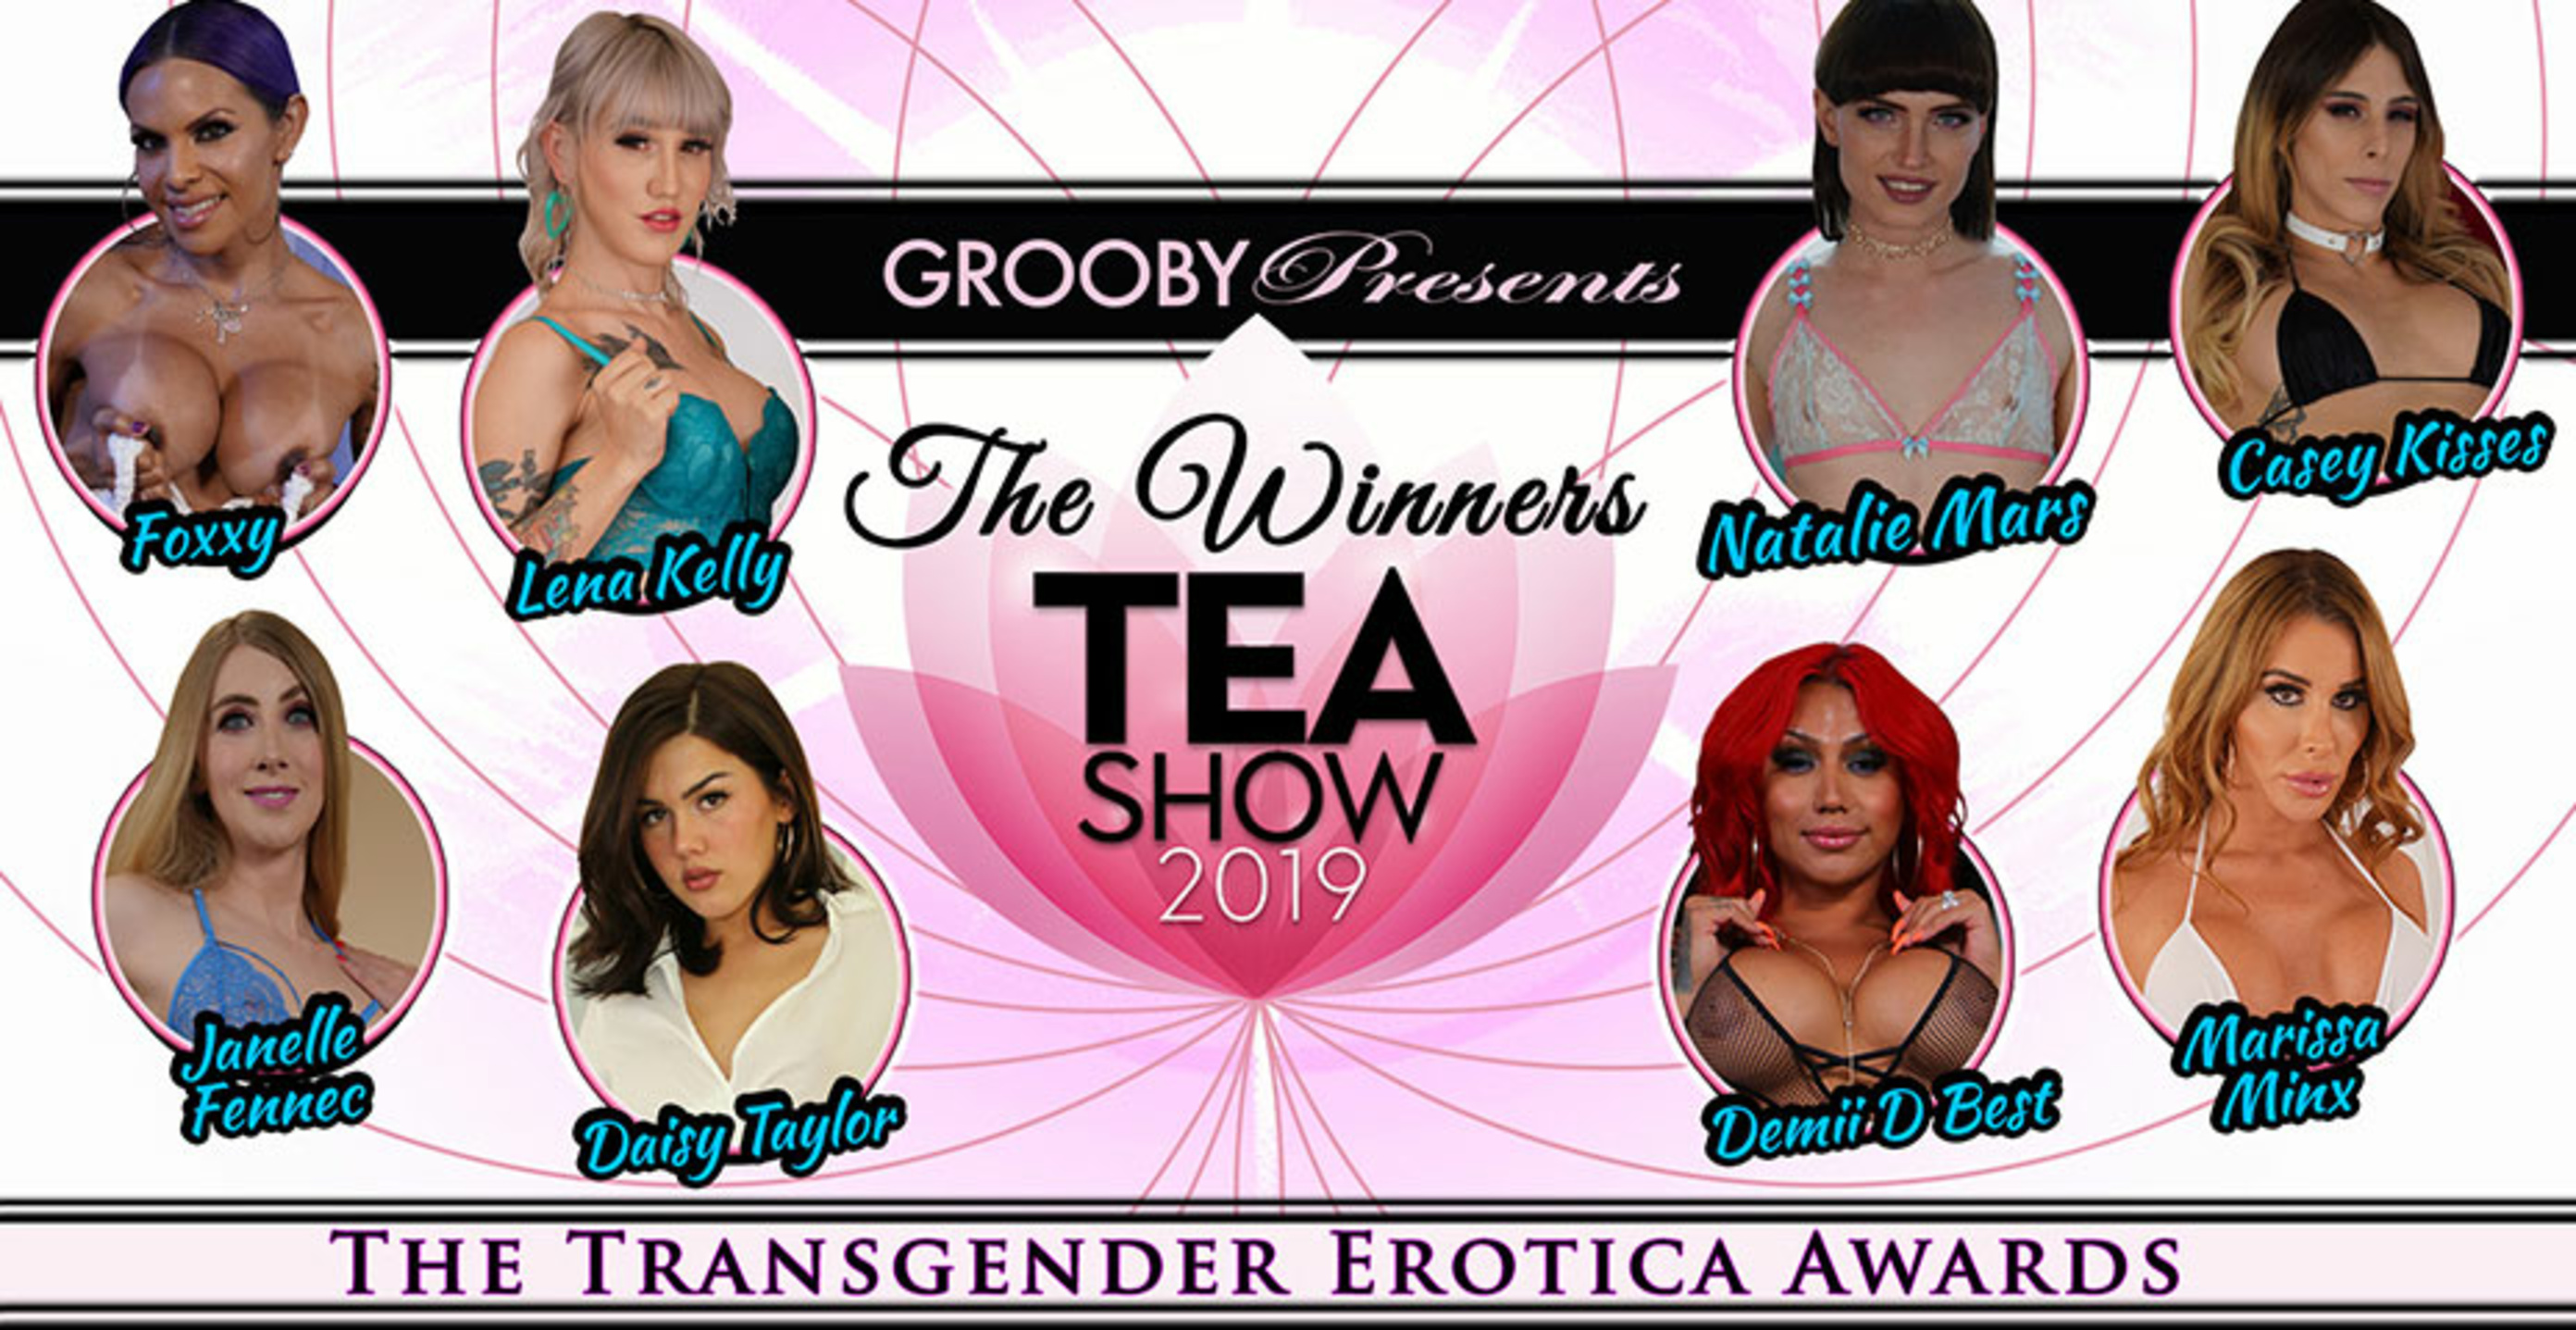 Miss transvestite contest